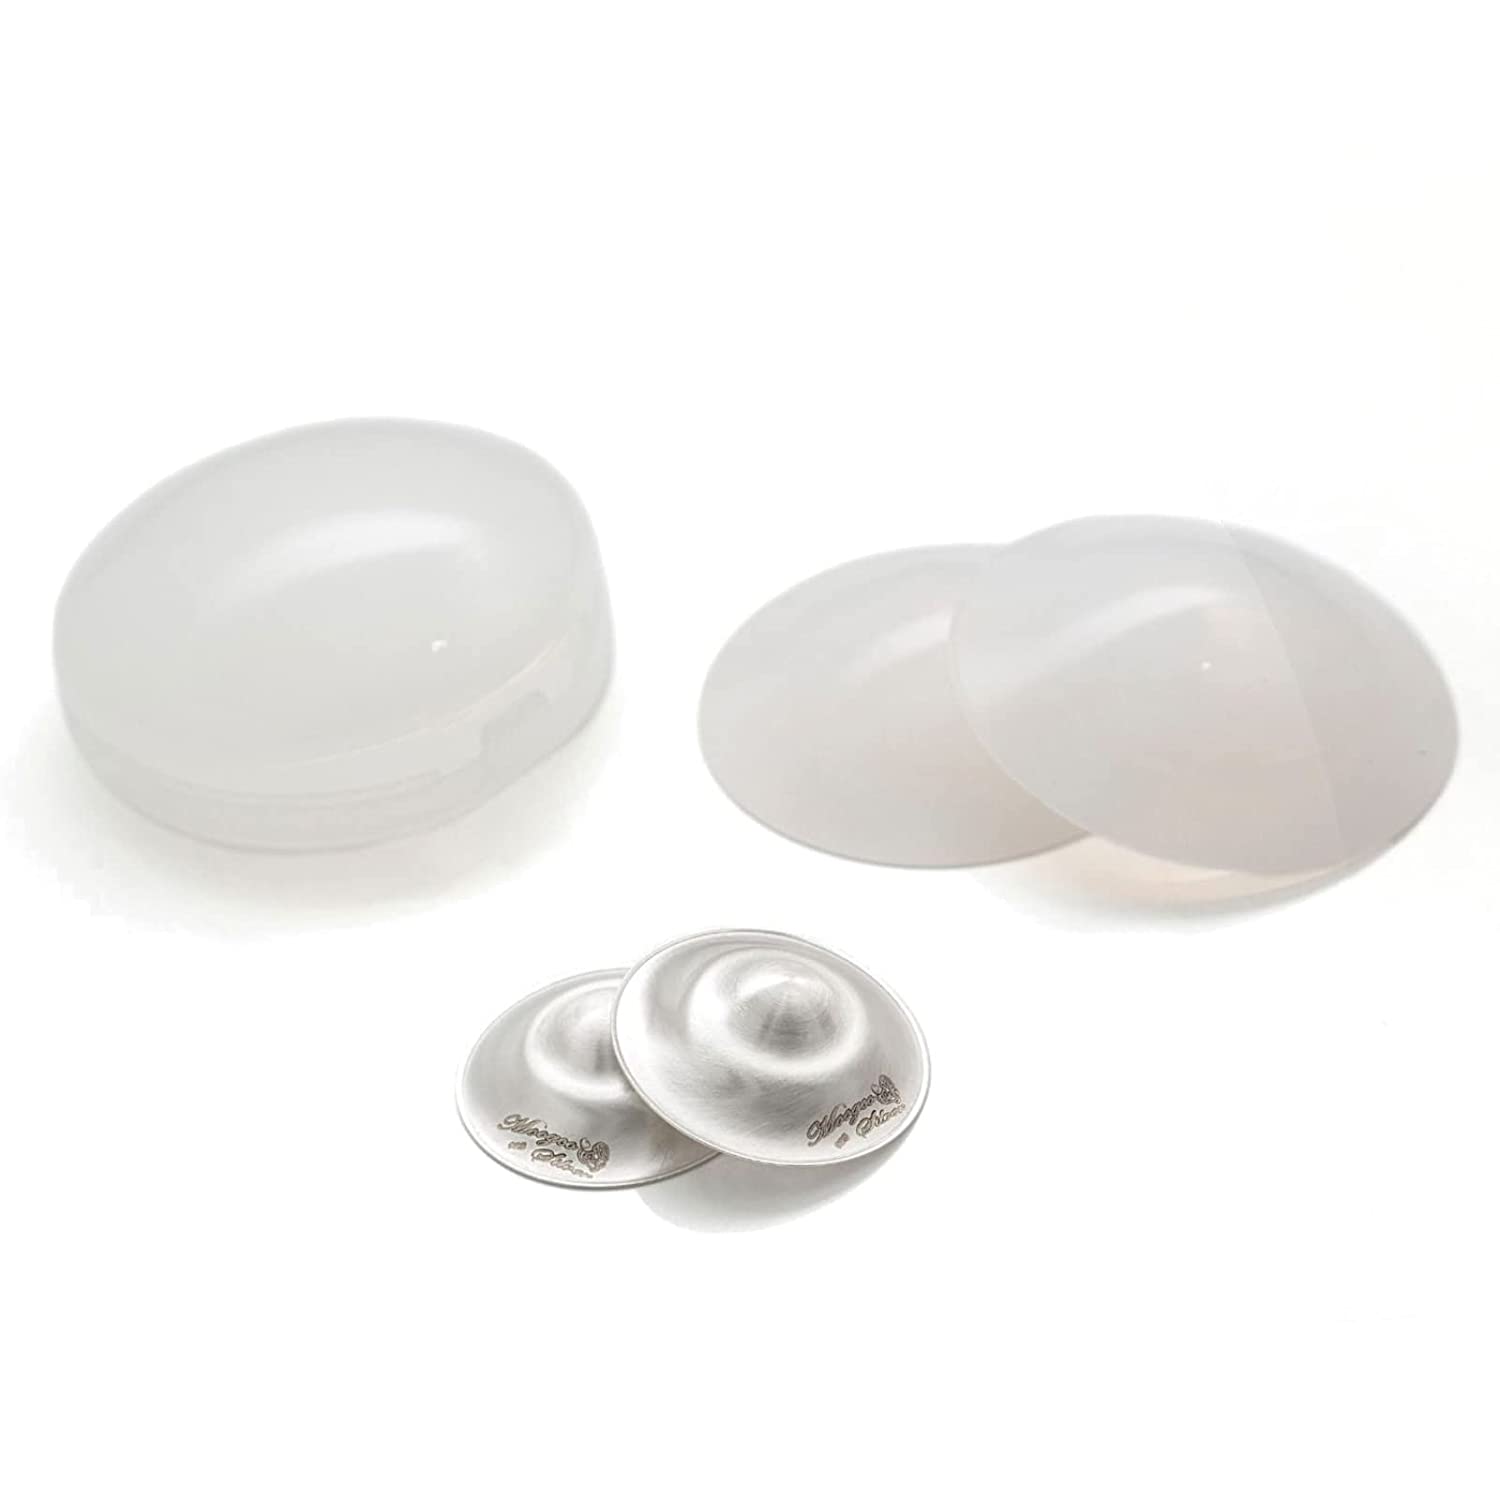 Premium Silver Nursing Cups for Comfortable and Convenient